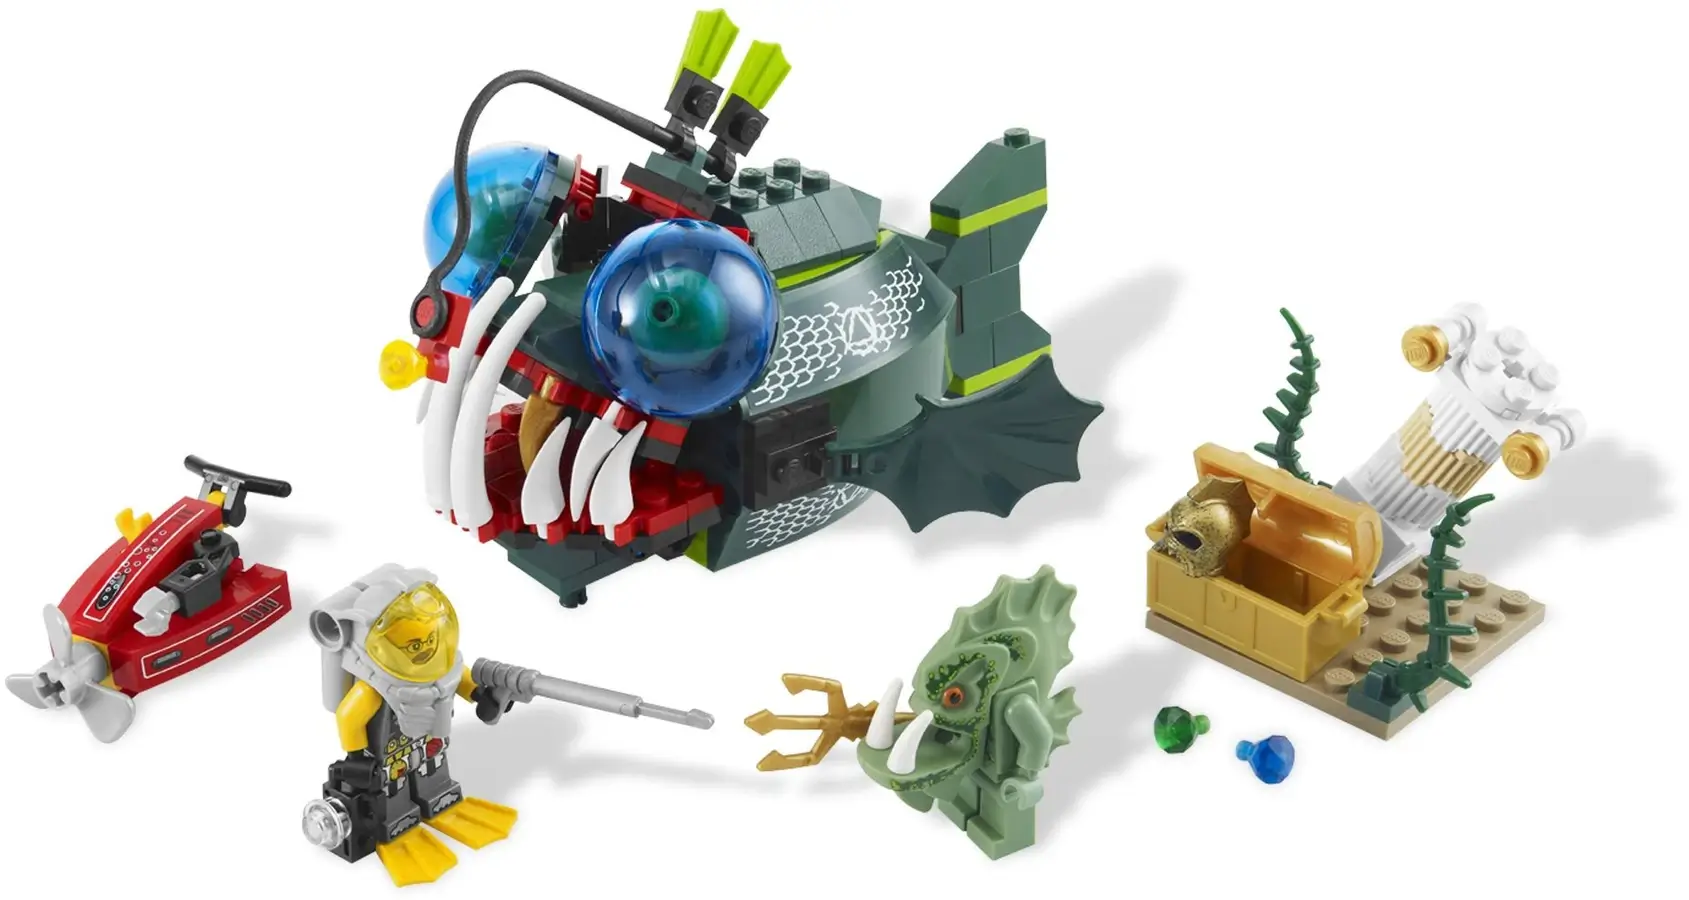 Atak ryby głębinowej – seria LEGO® Atlantis